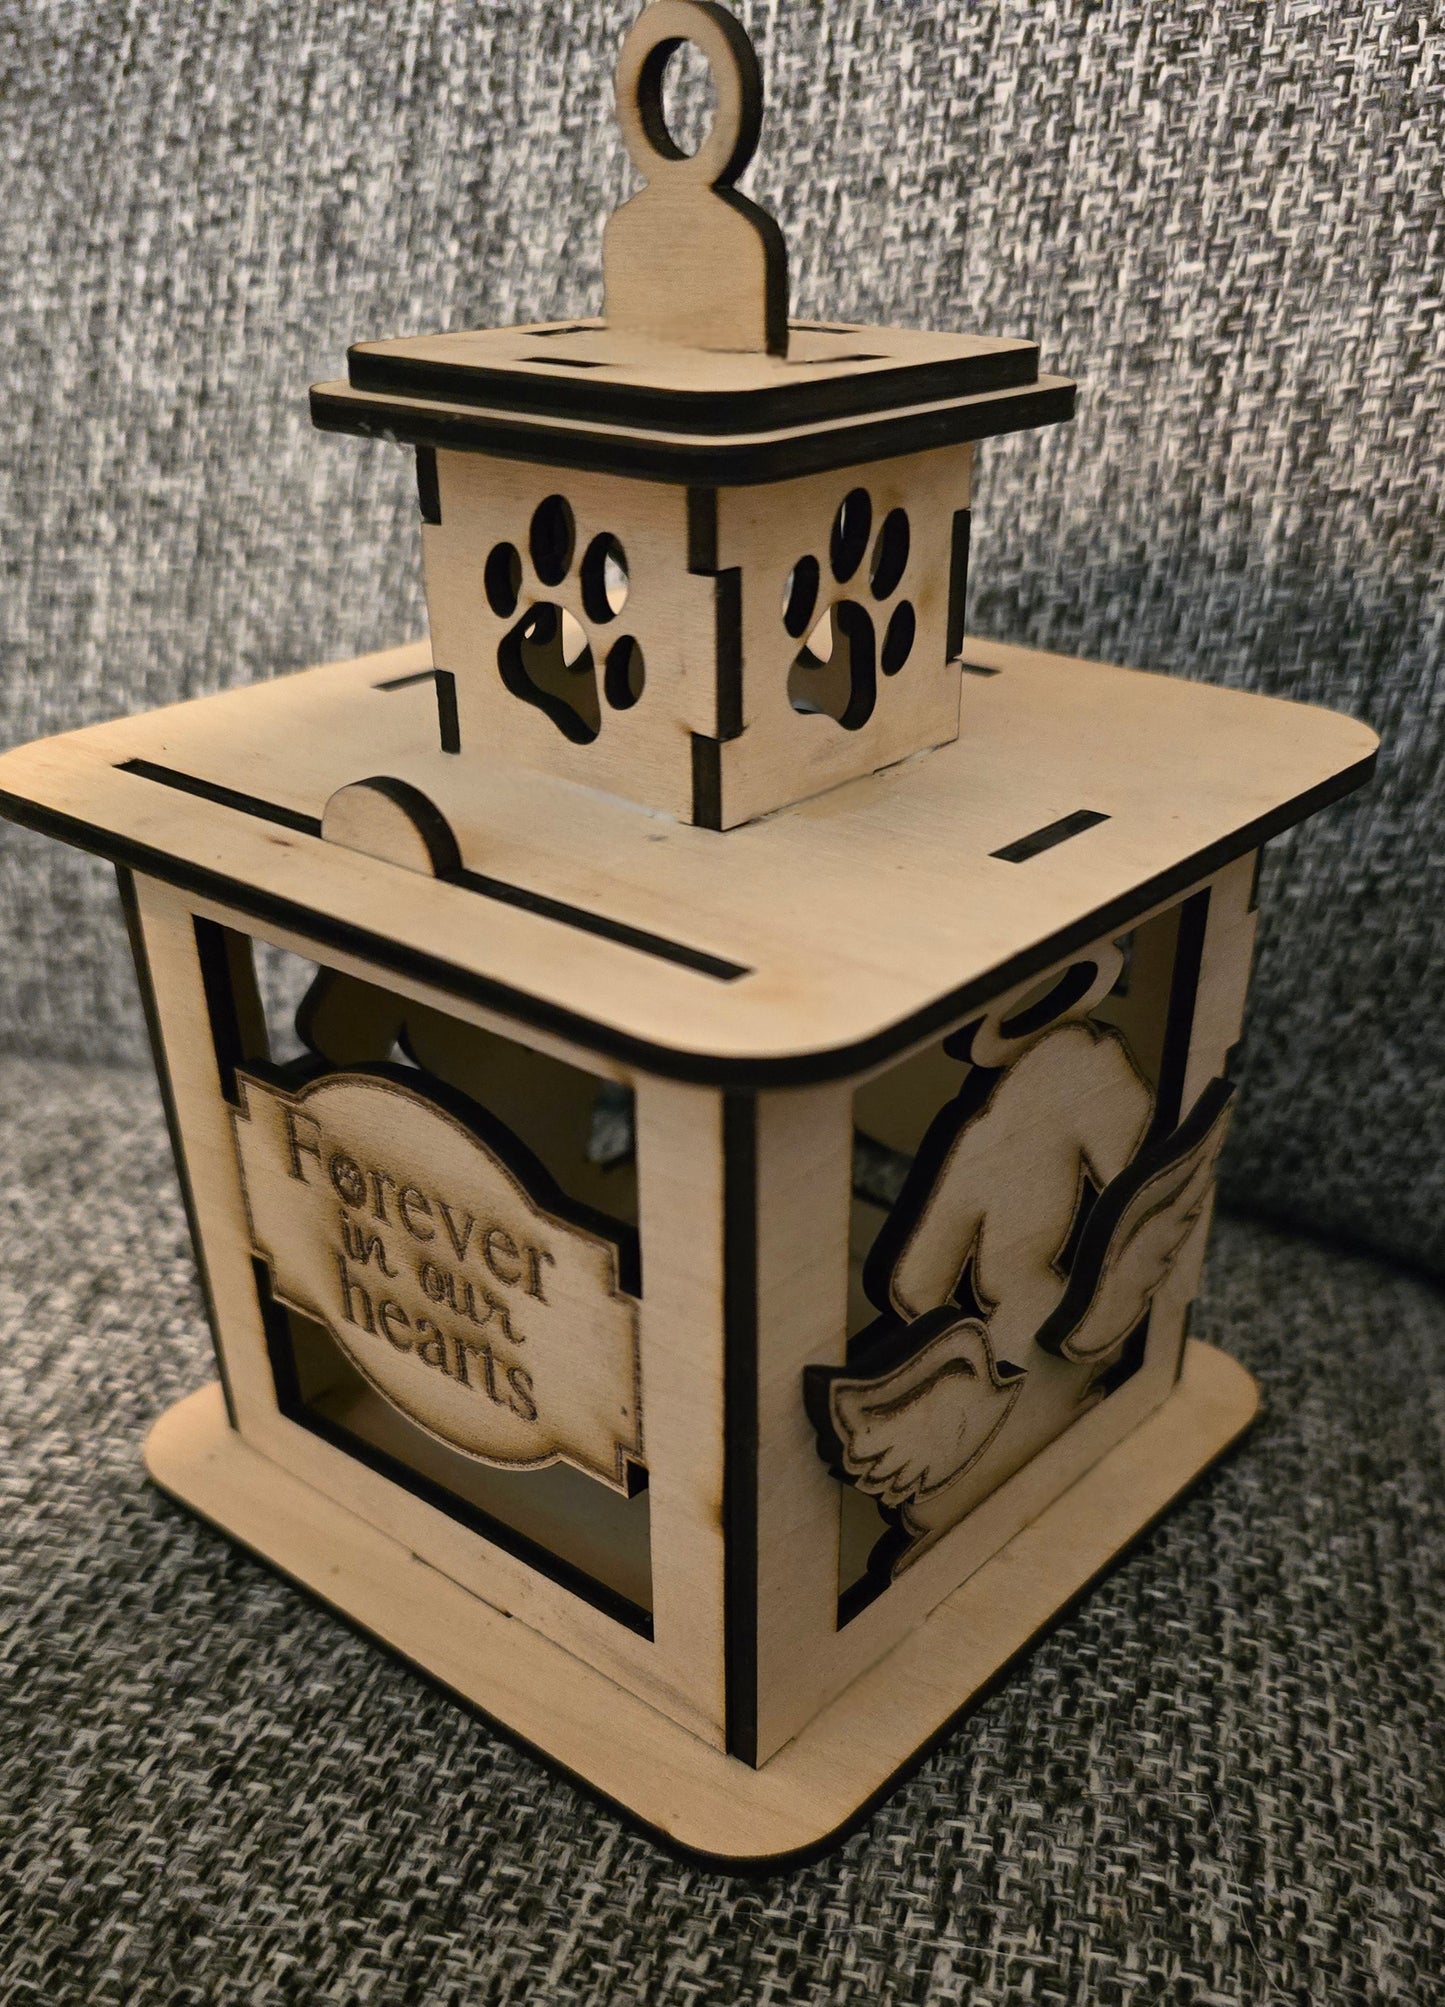 Dog Memorial Lantern - Personalised